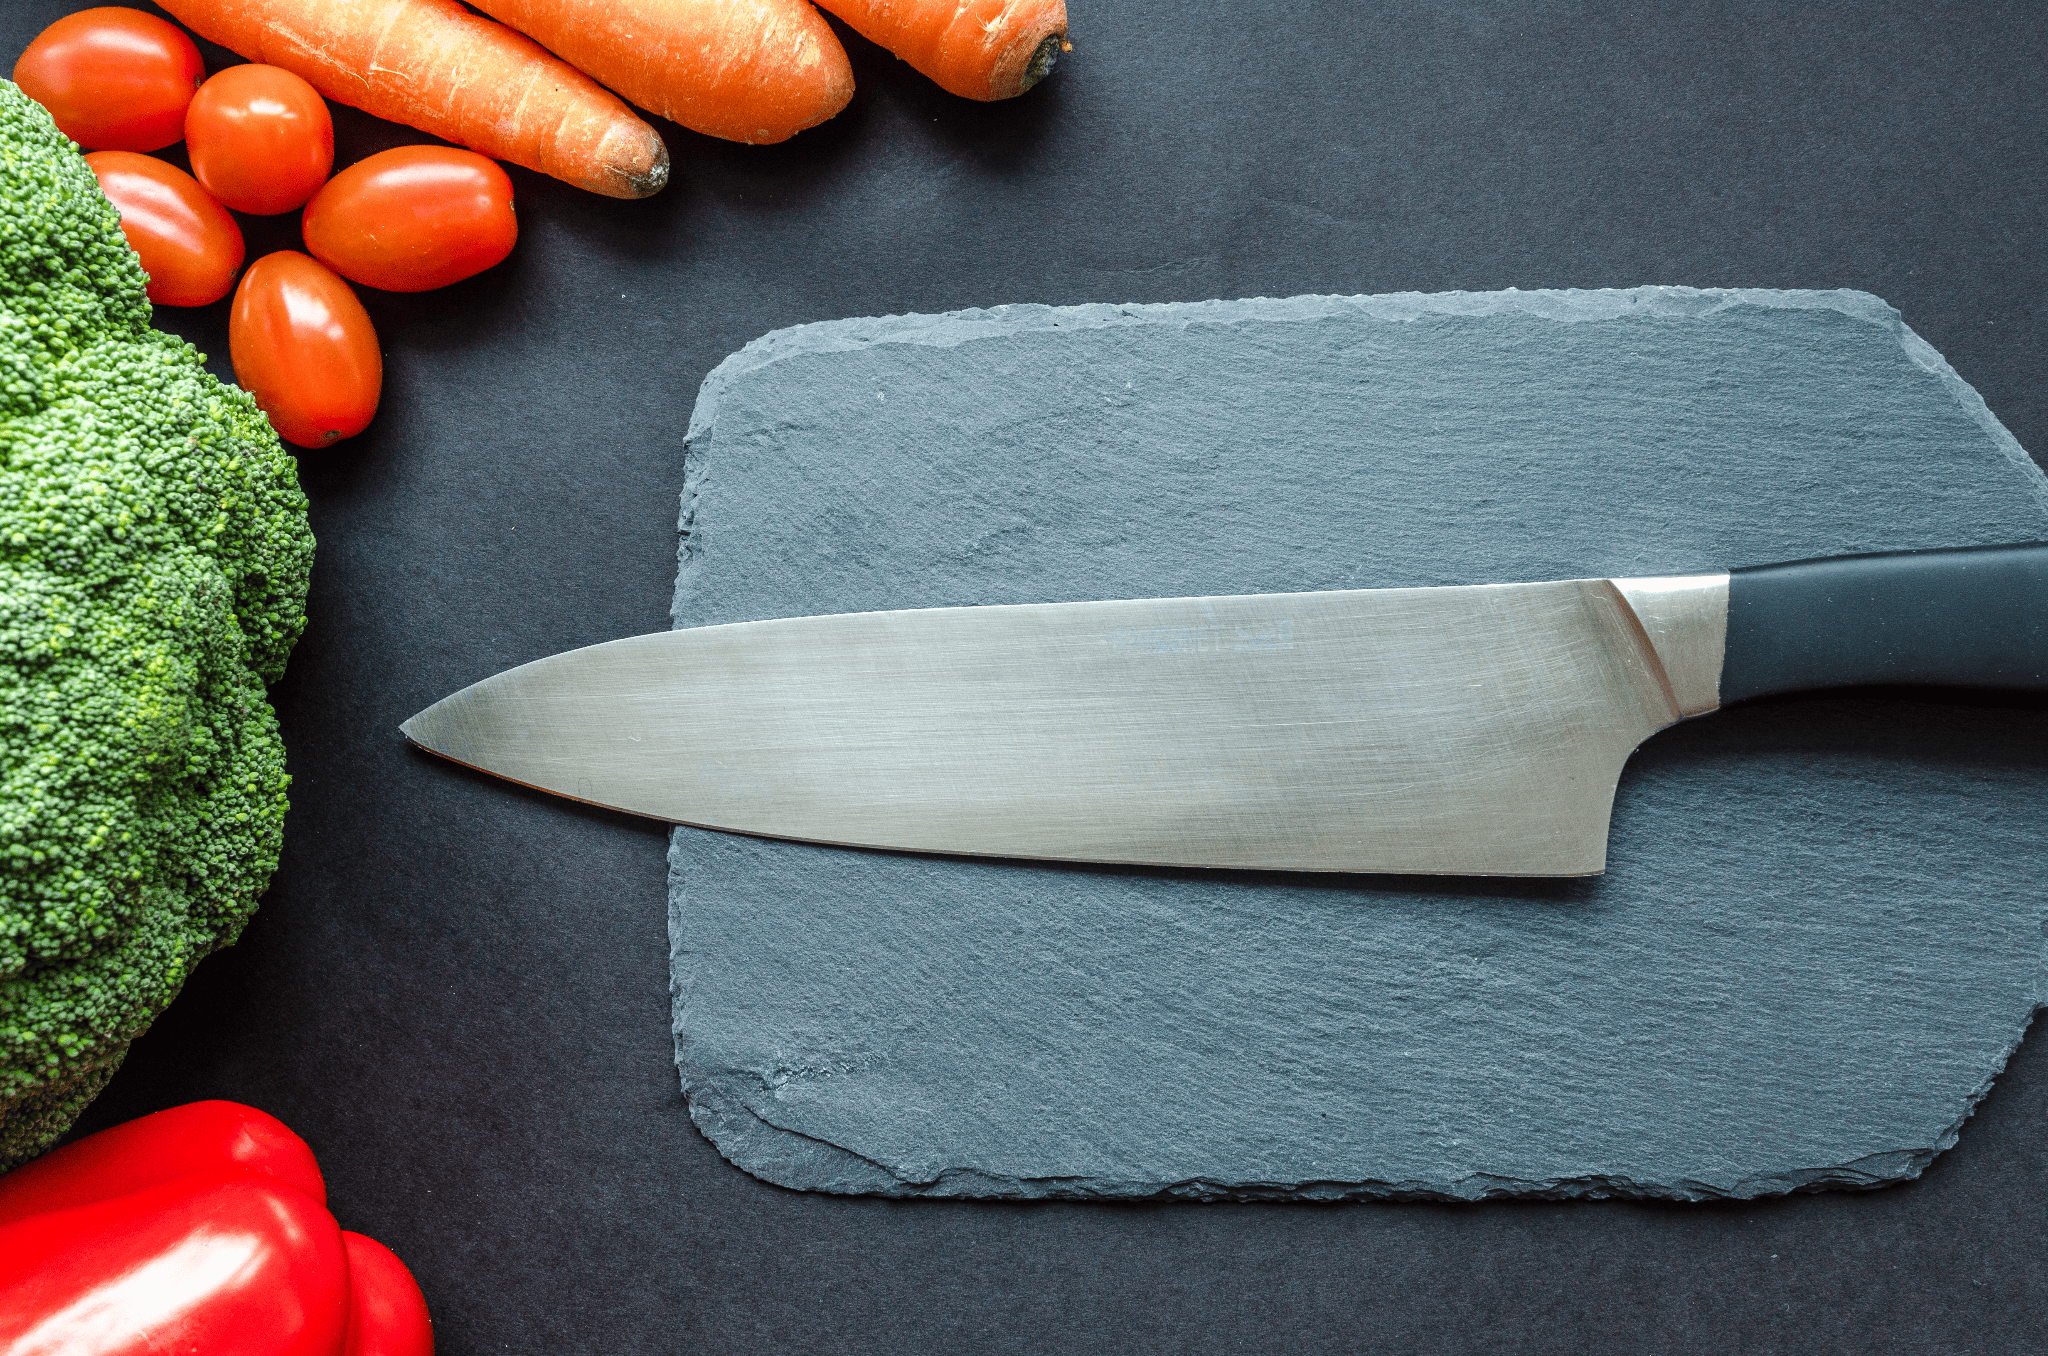 chef's knife on a slate cutting board